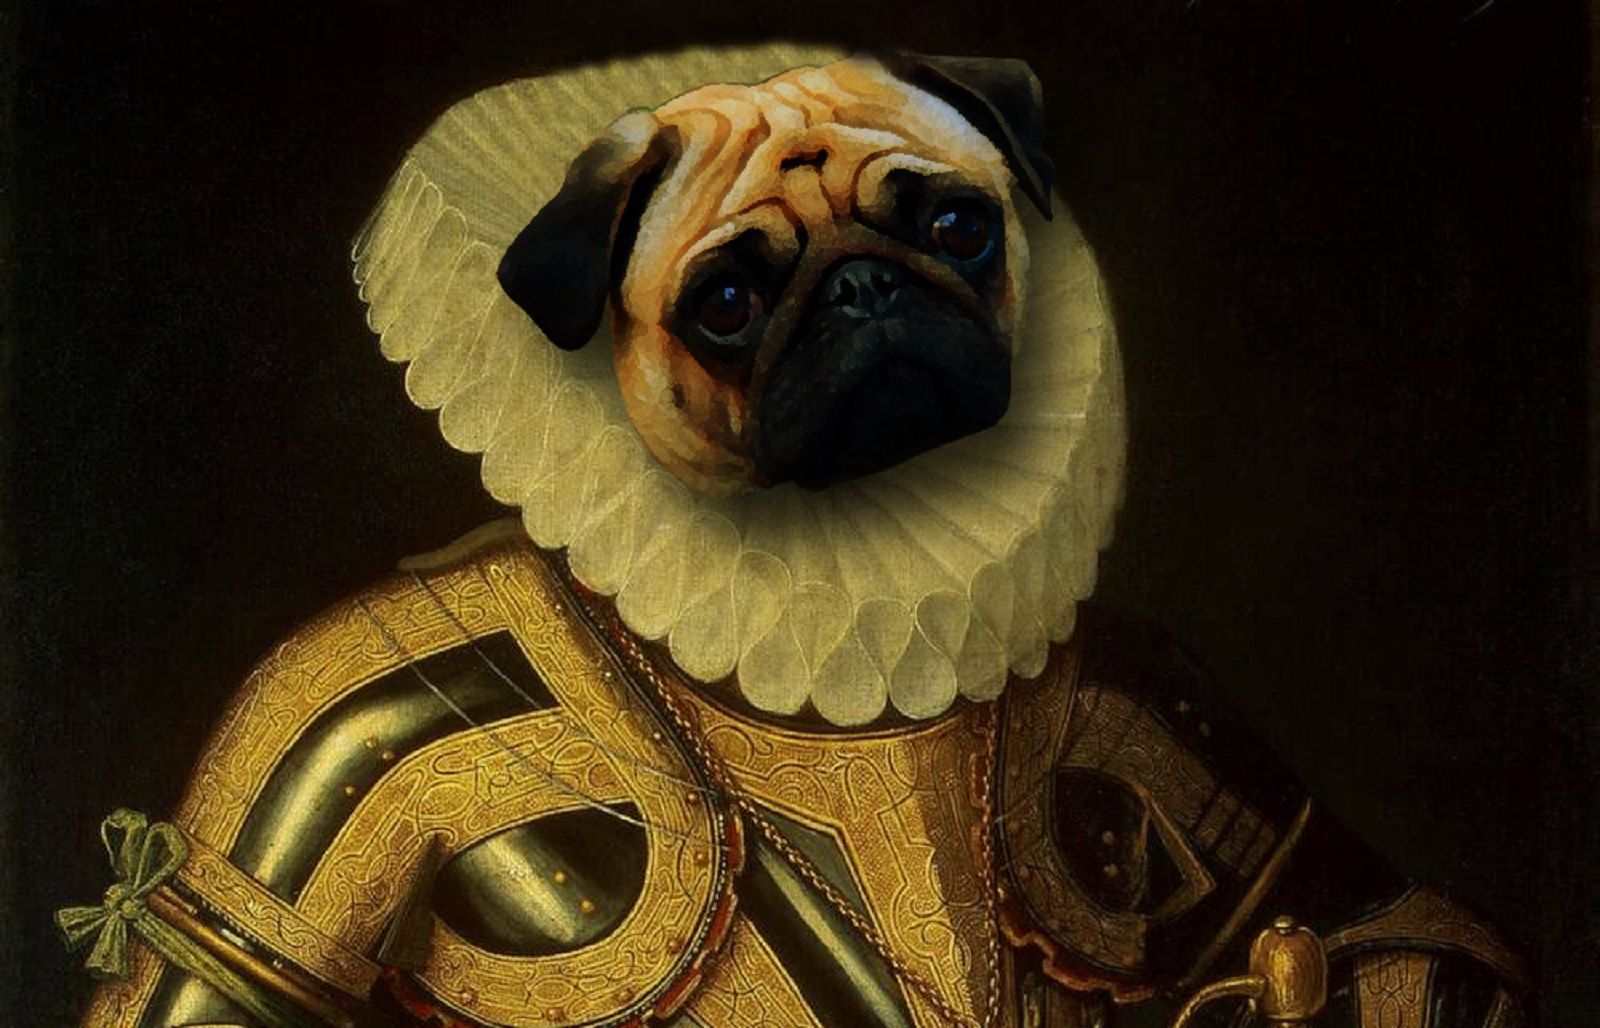 Amusing Images Of Animals Photoshopped Into Renaissance Paintings image 9